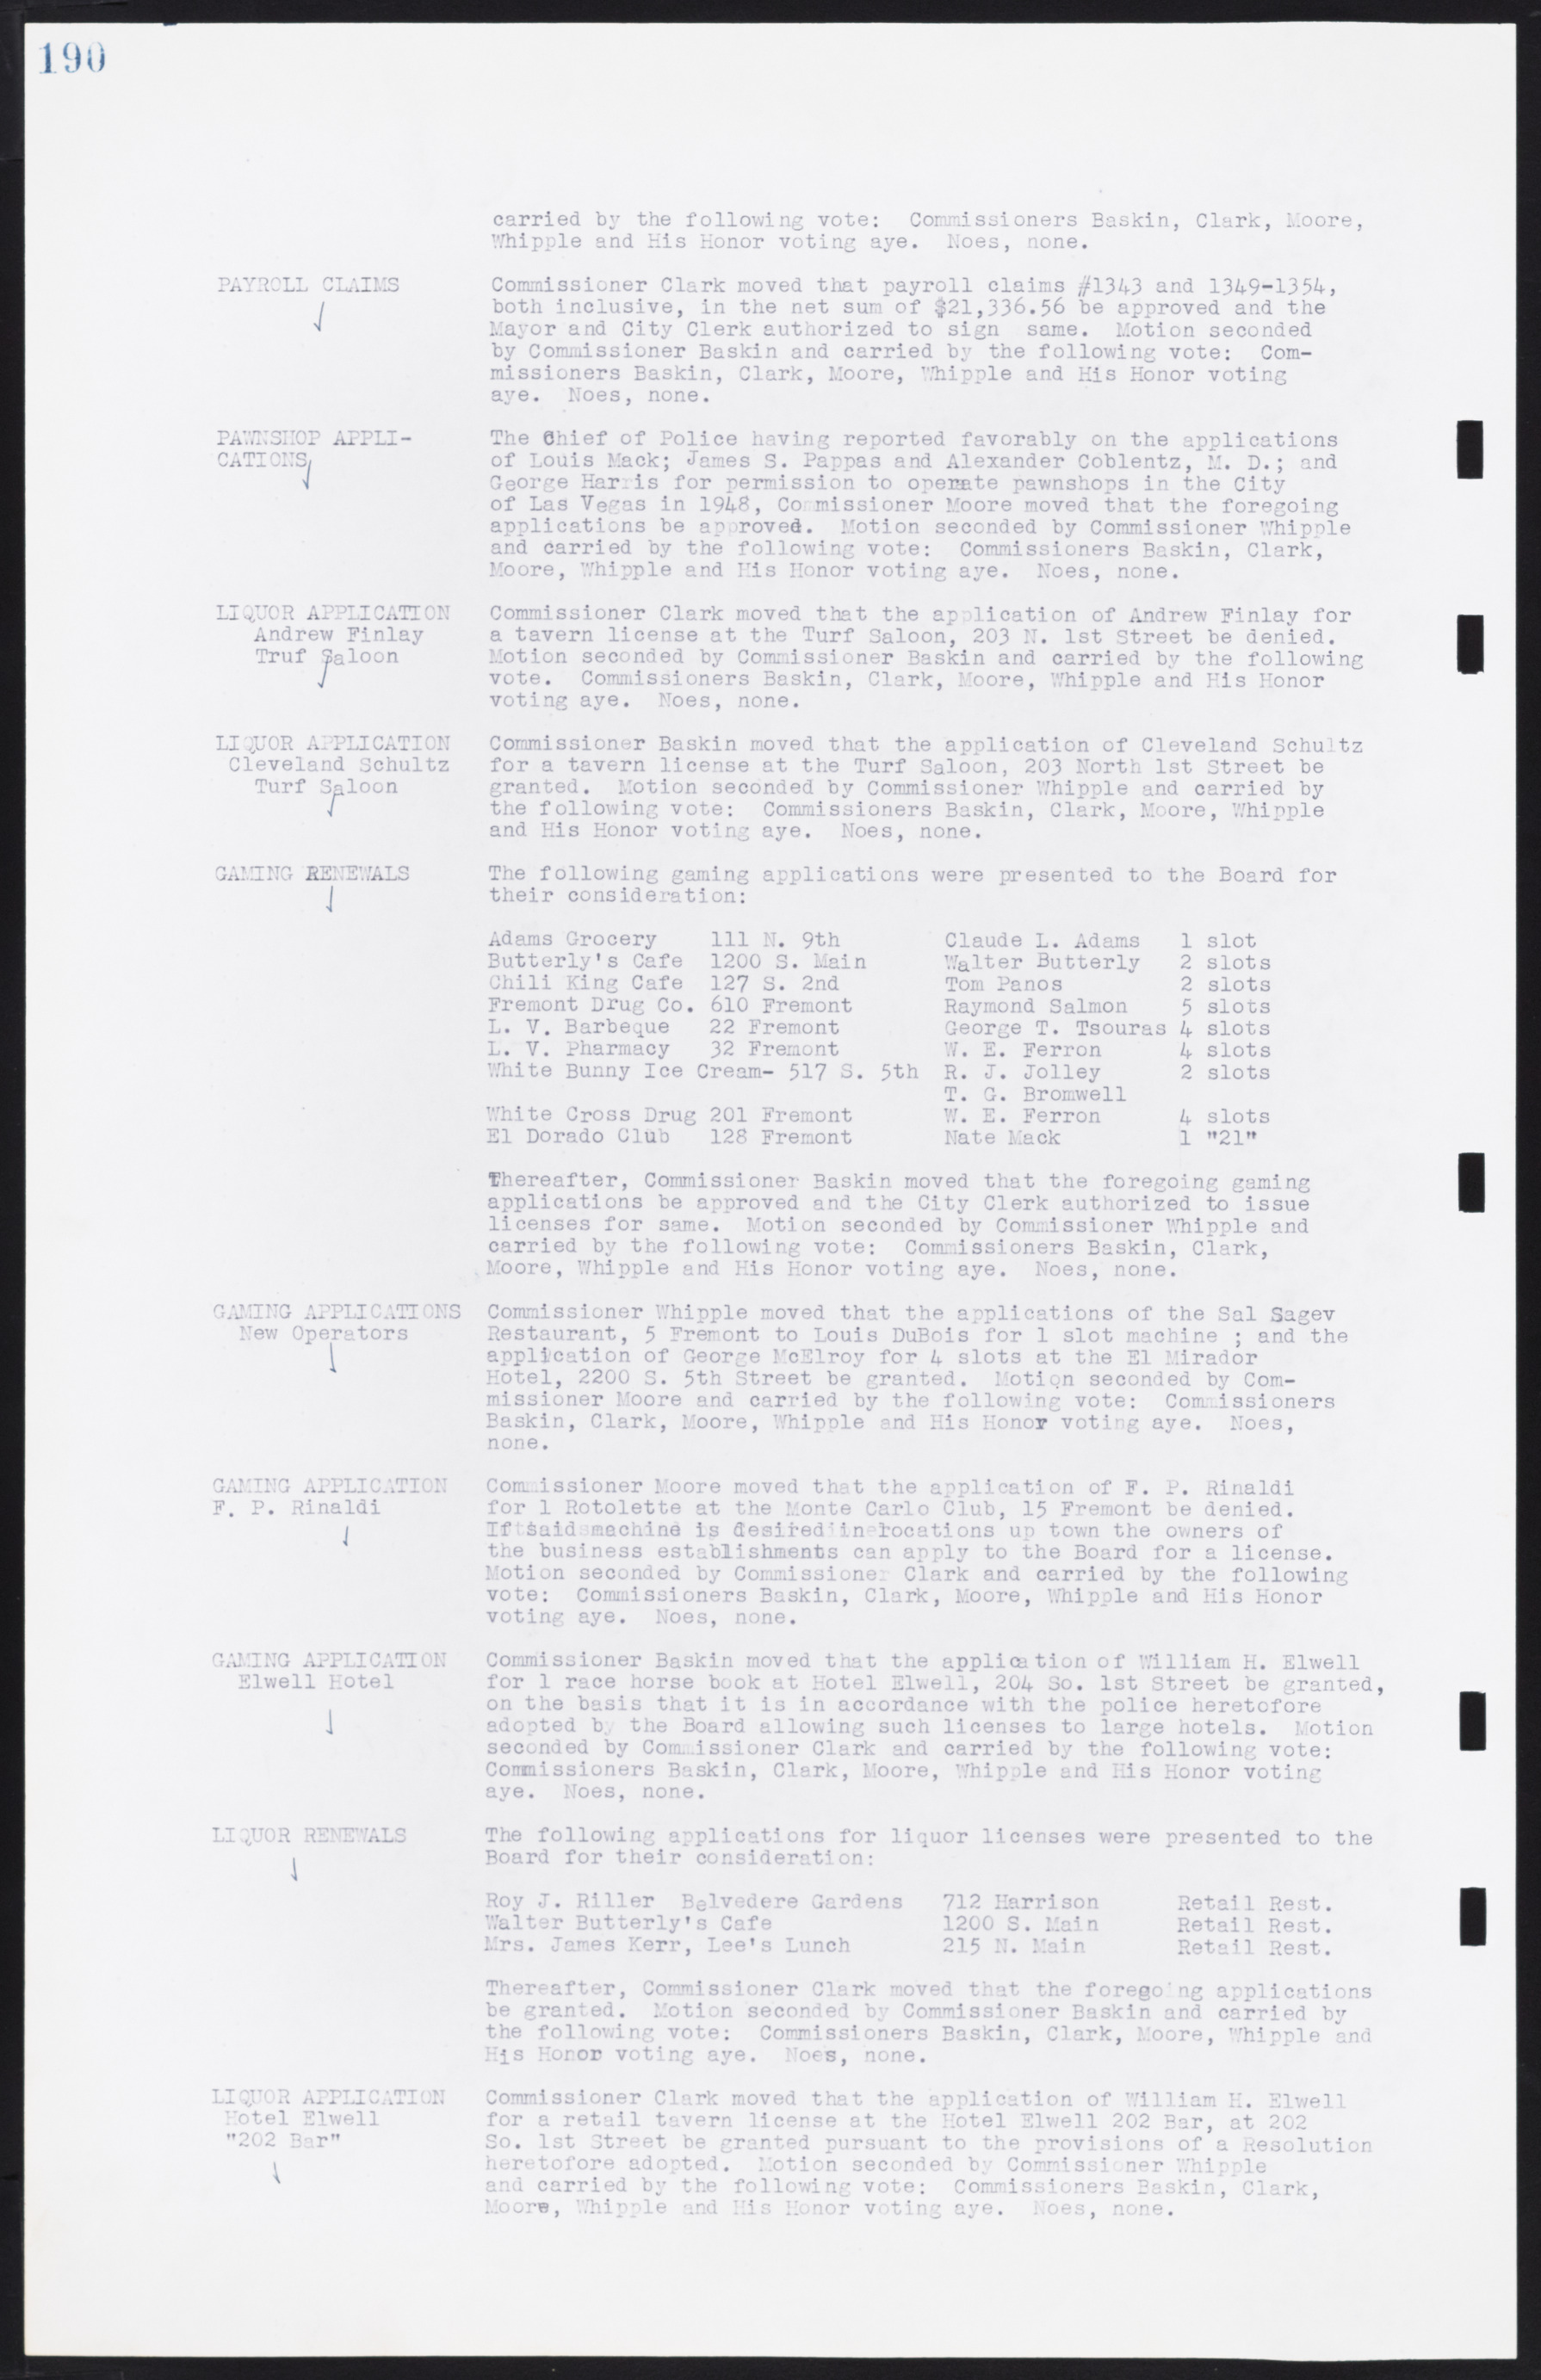 Las Vegas City Commission Minutes, January 7, 1947 to October 26, 1949, lvc000006-212